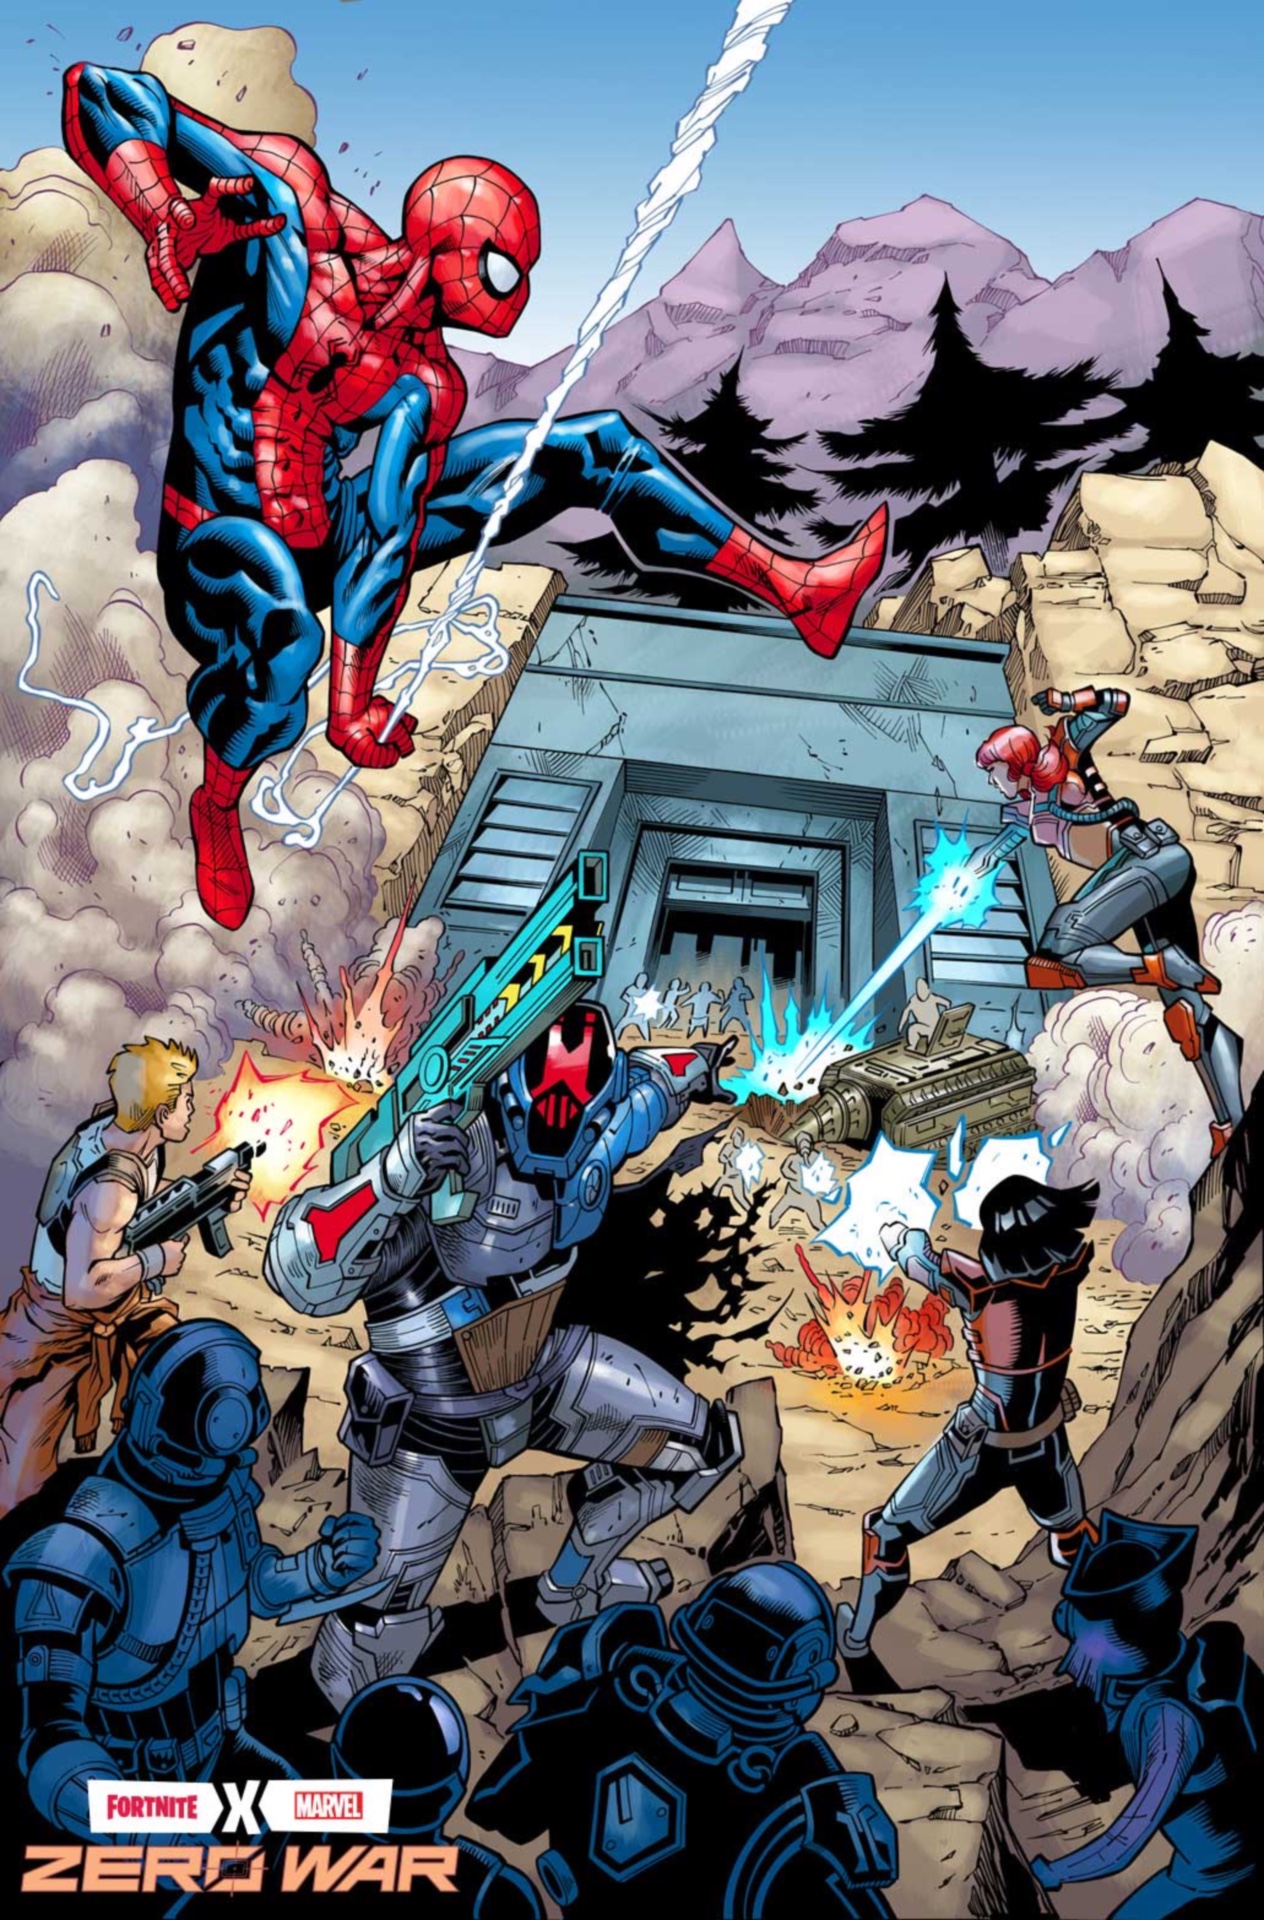 Fortnite X Marvel Zero War #1 preview page